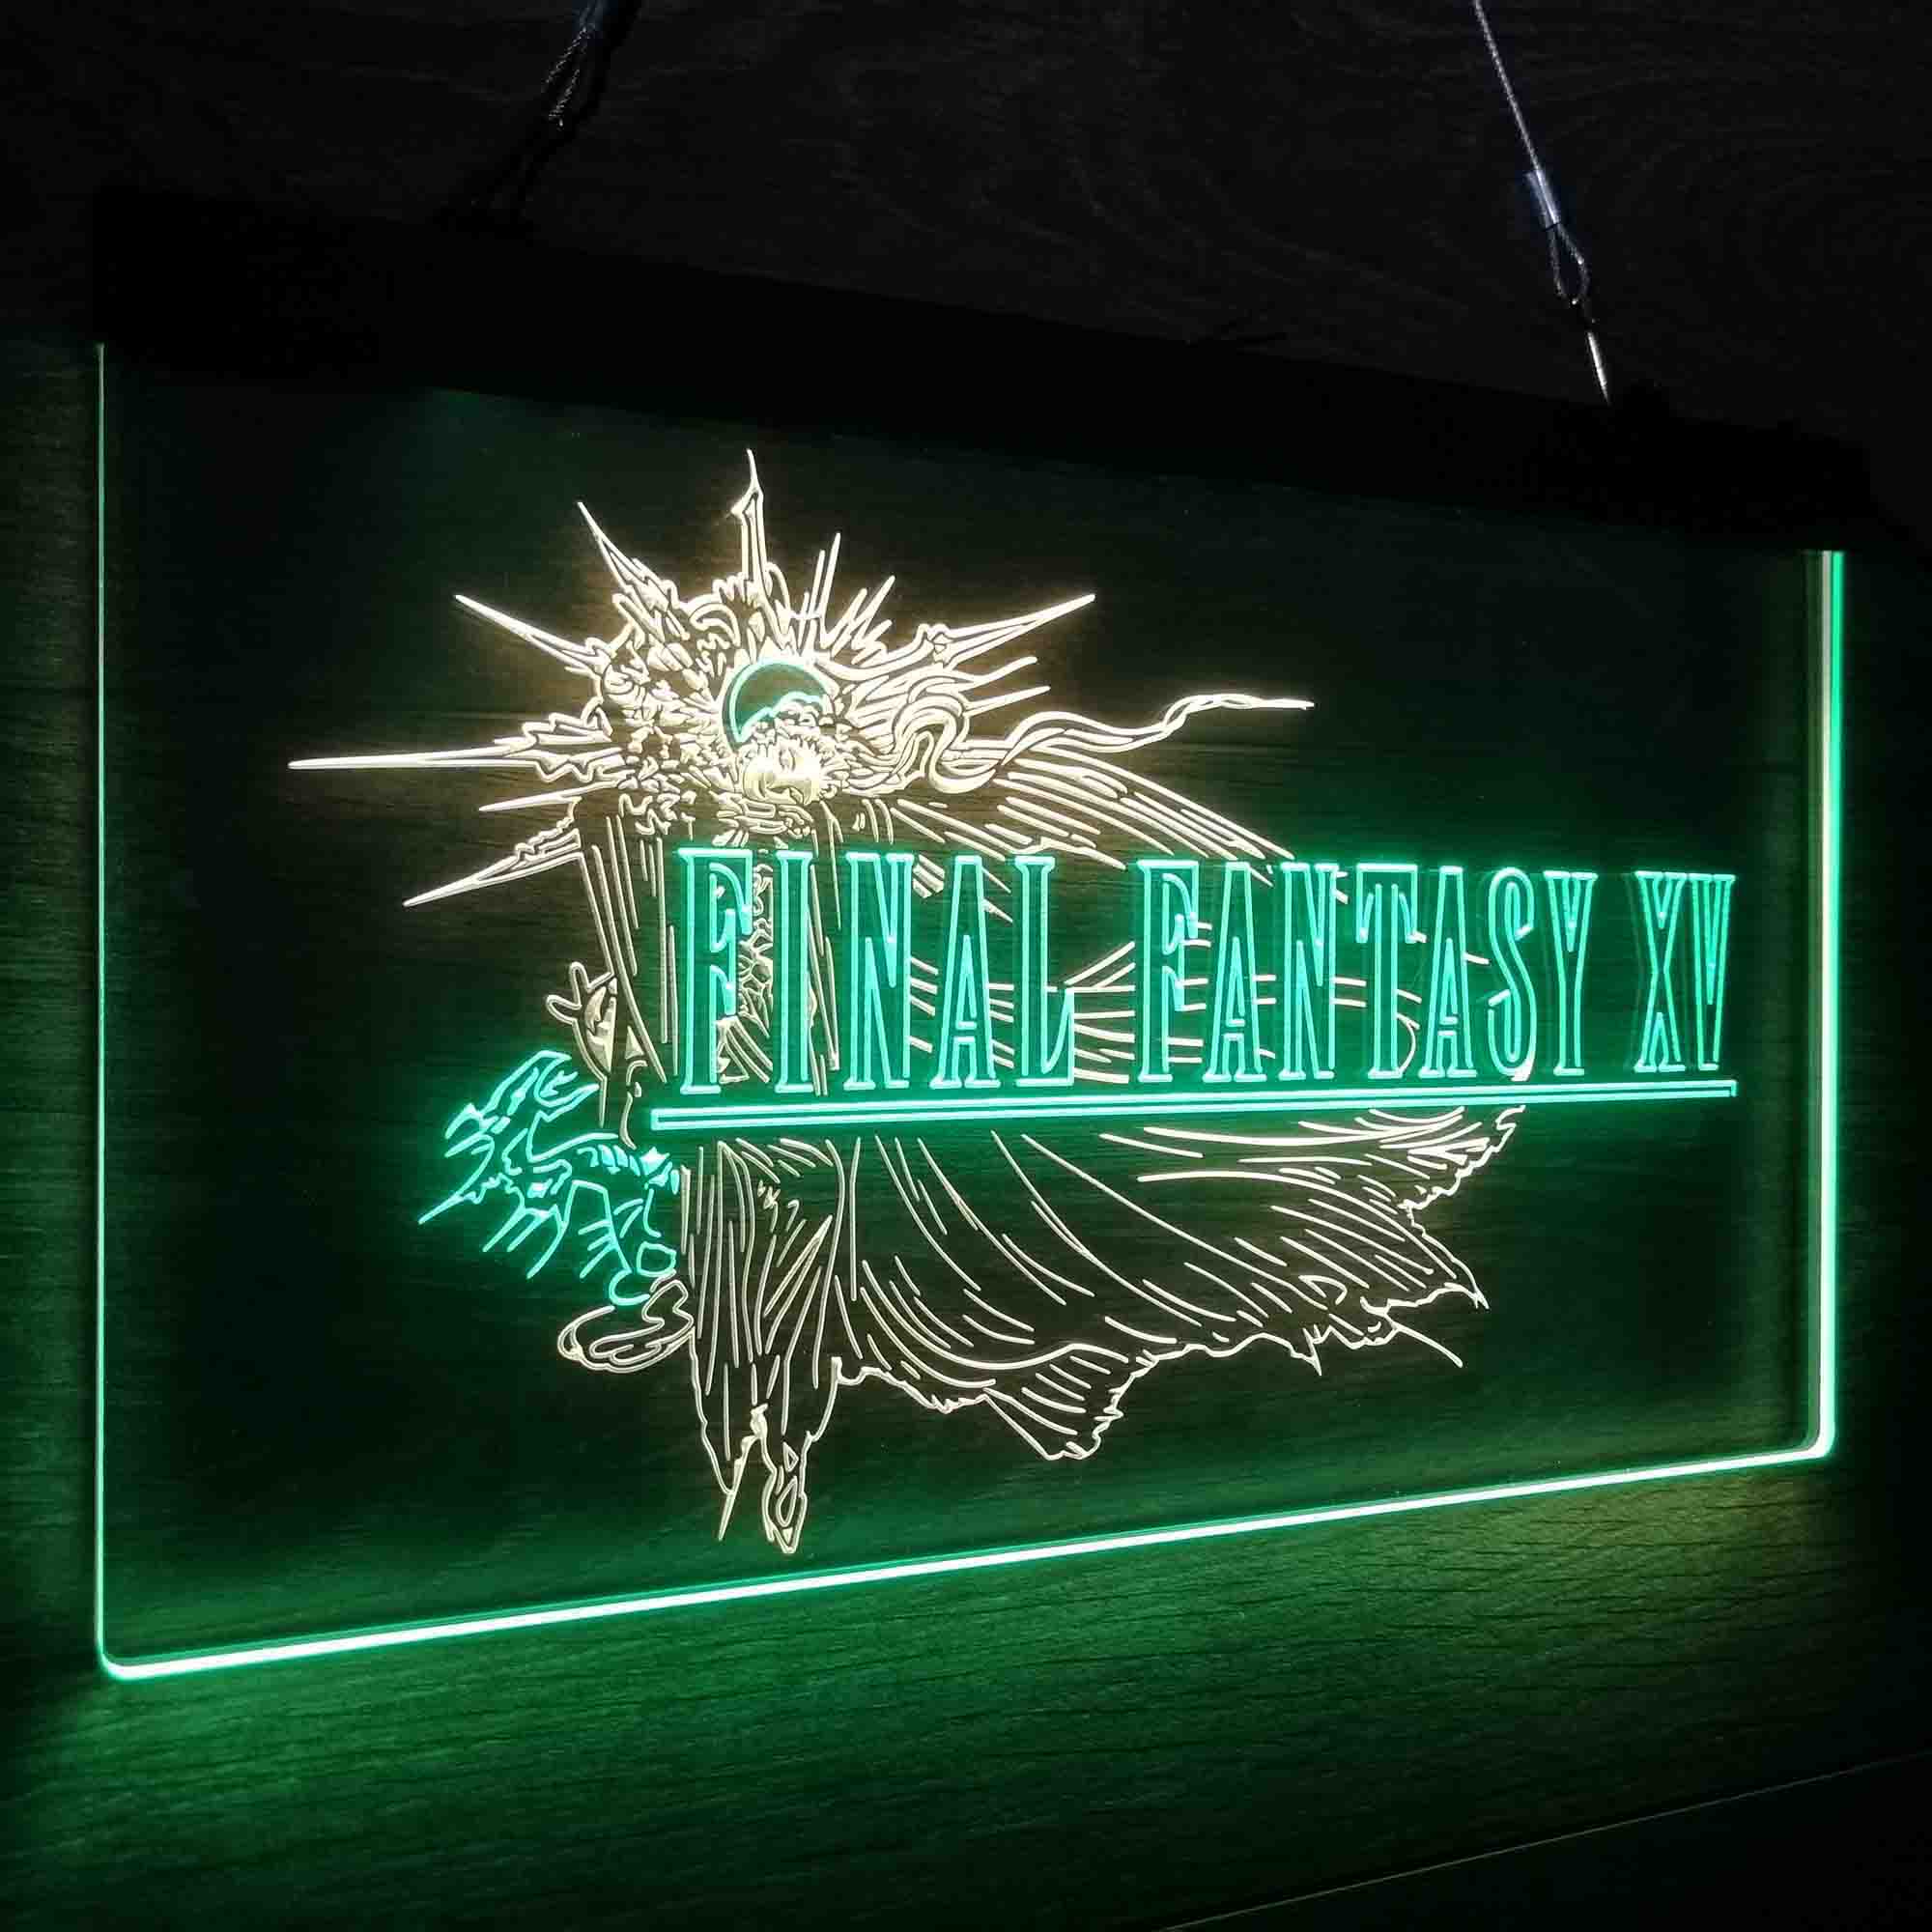 Final Fantasy XV Game Room Neon-Like LED Sign